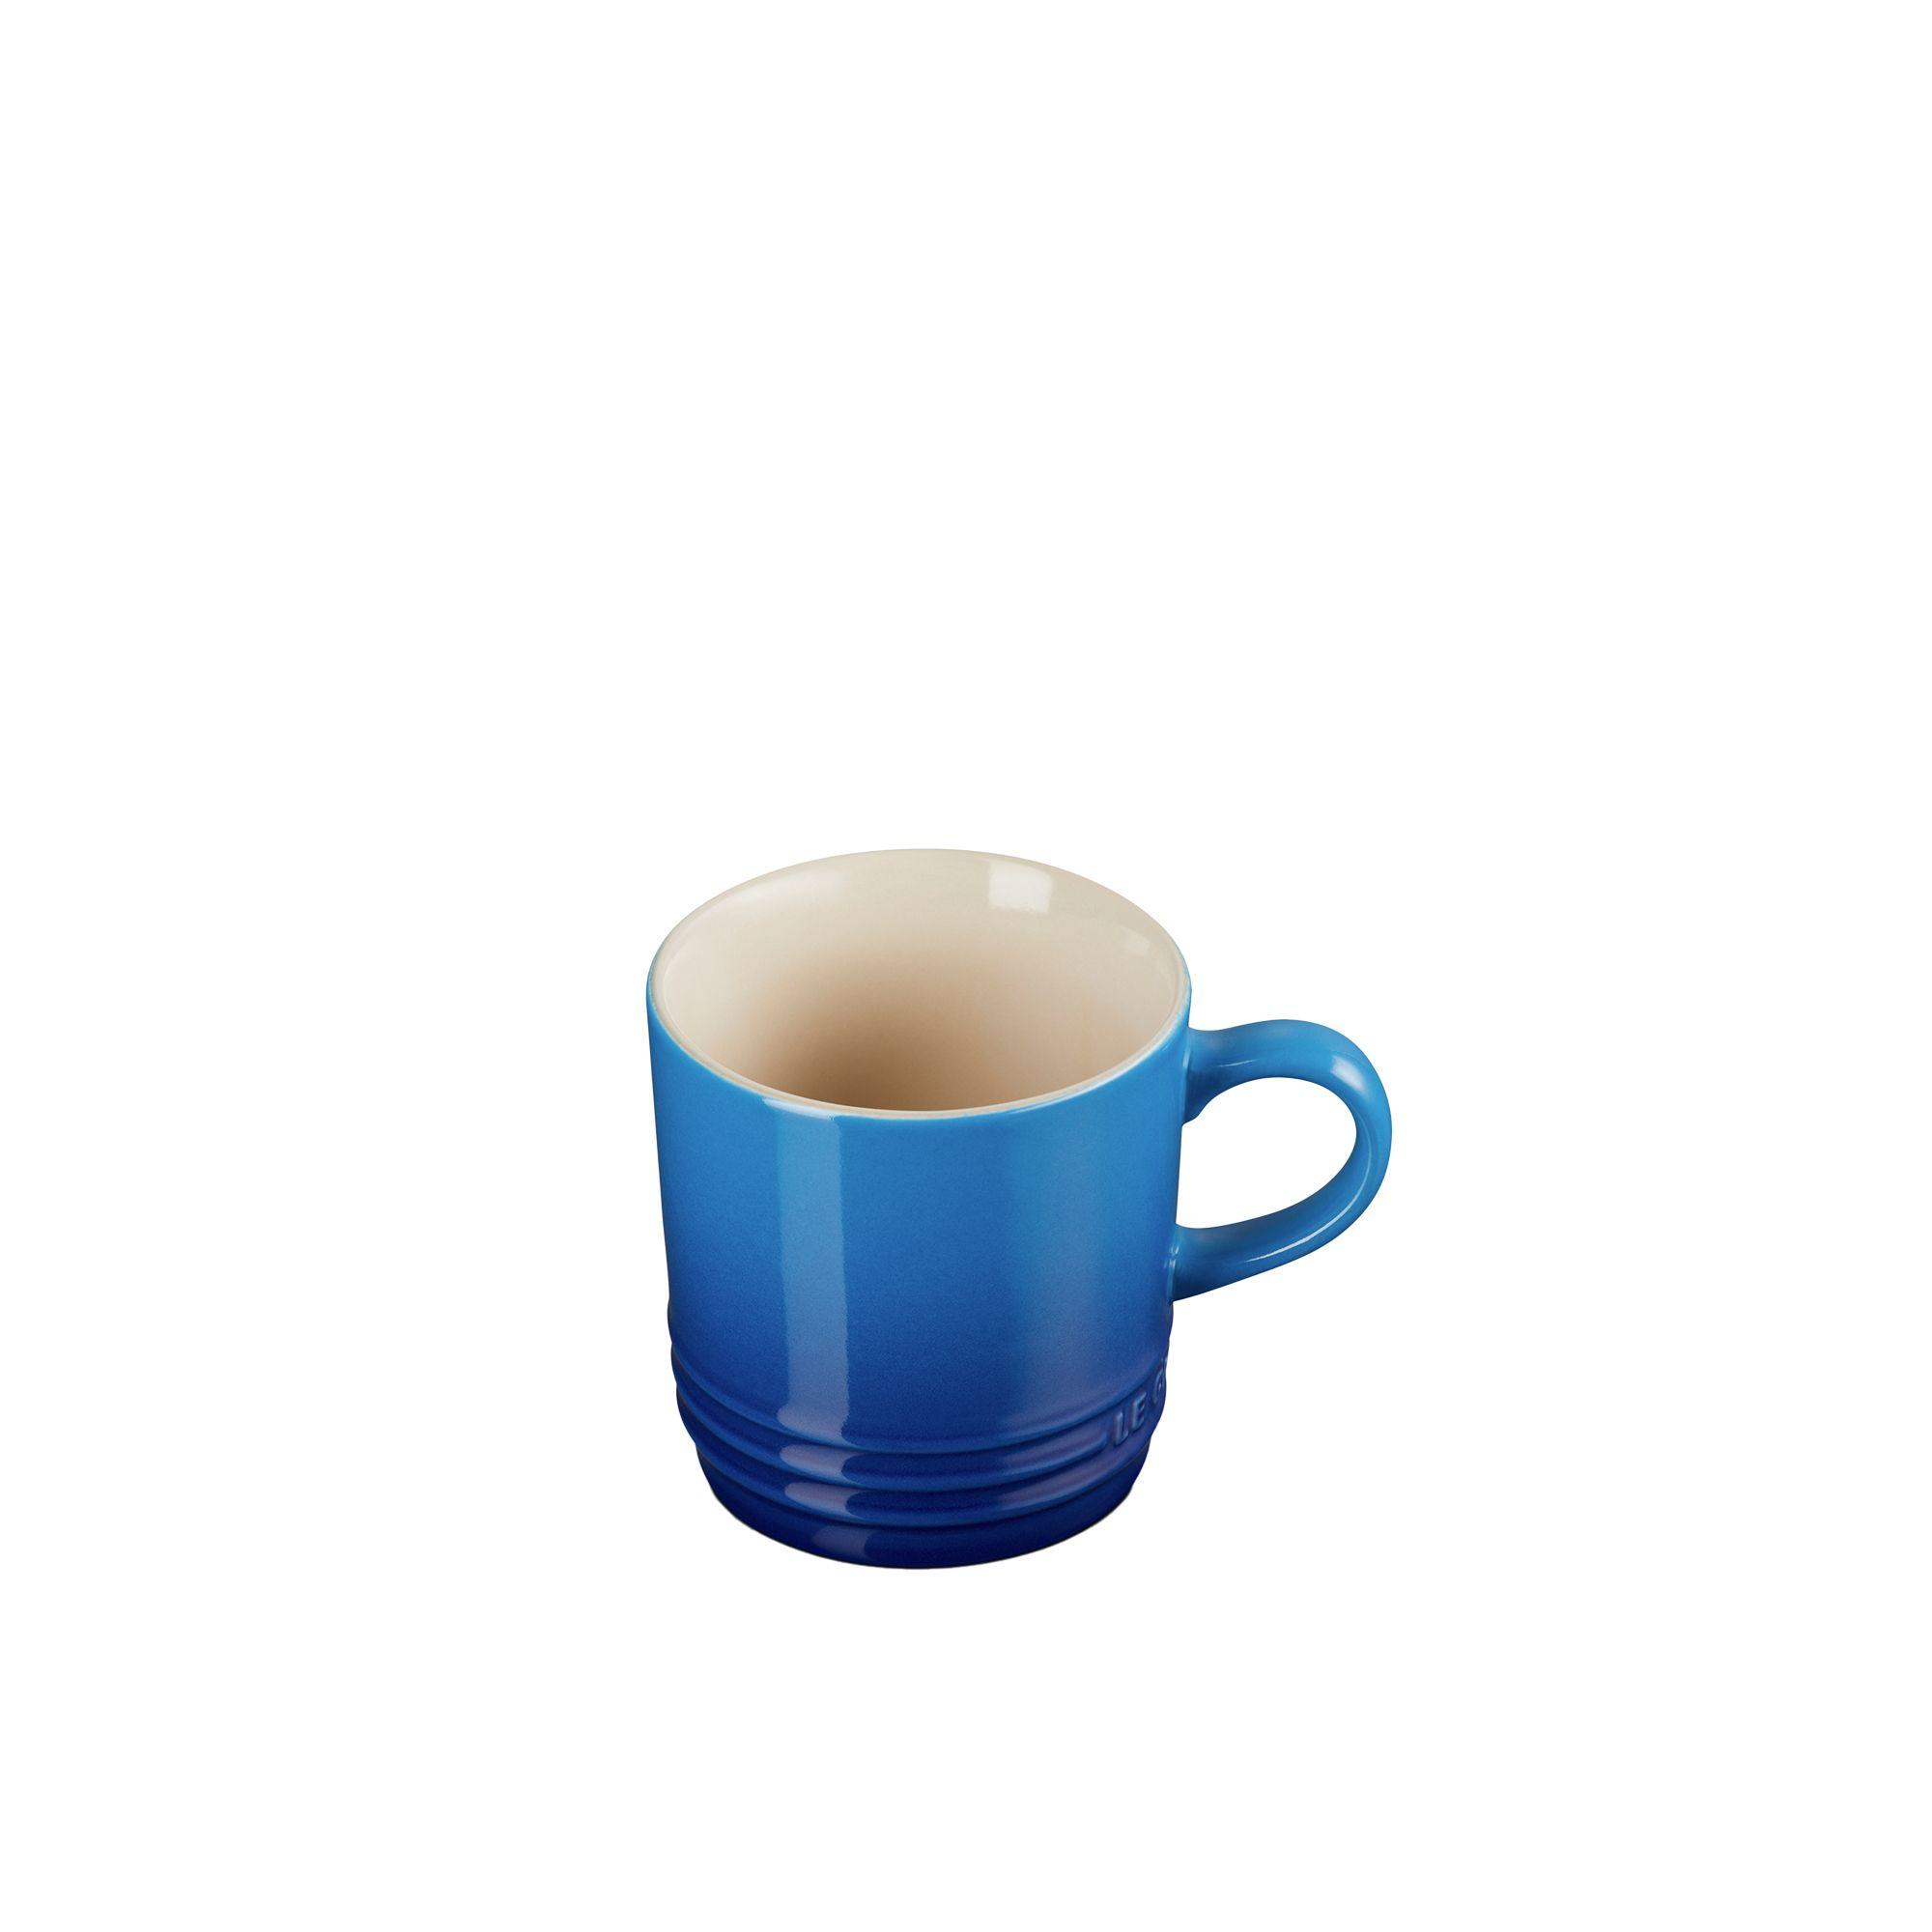 Le Creuset Stoneware Cappuccino Mug 200ml Azure Blue Image 5